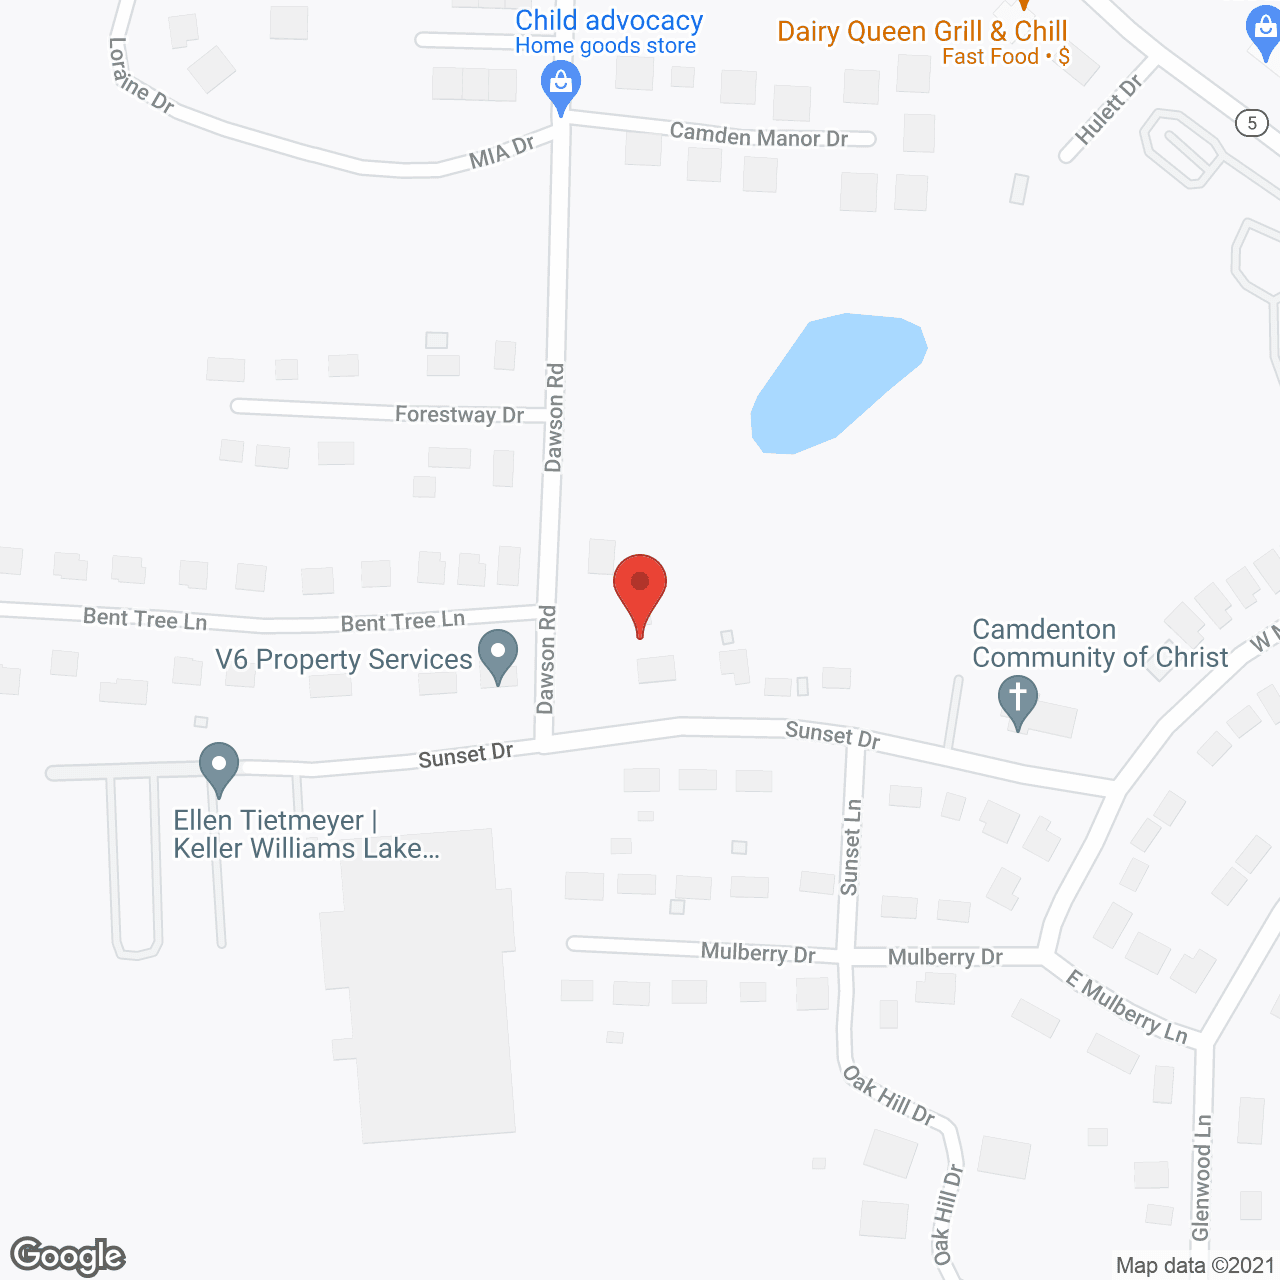 Camden Manors in google map